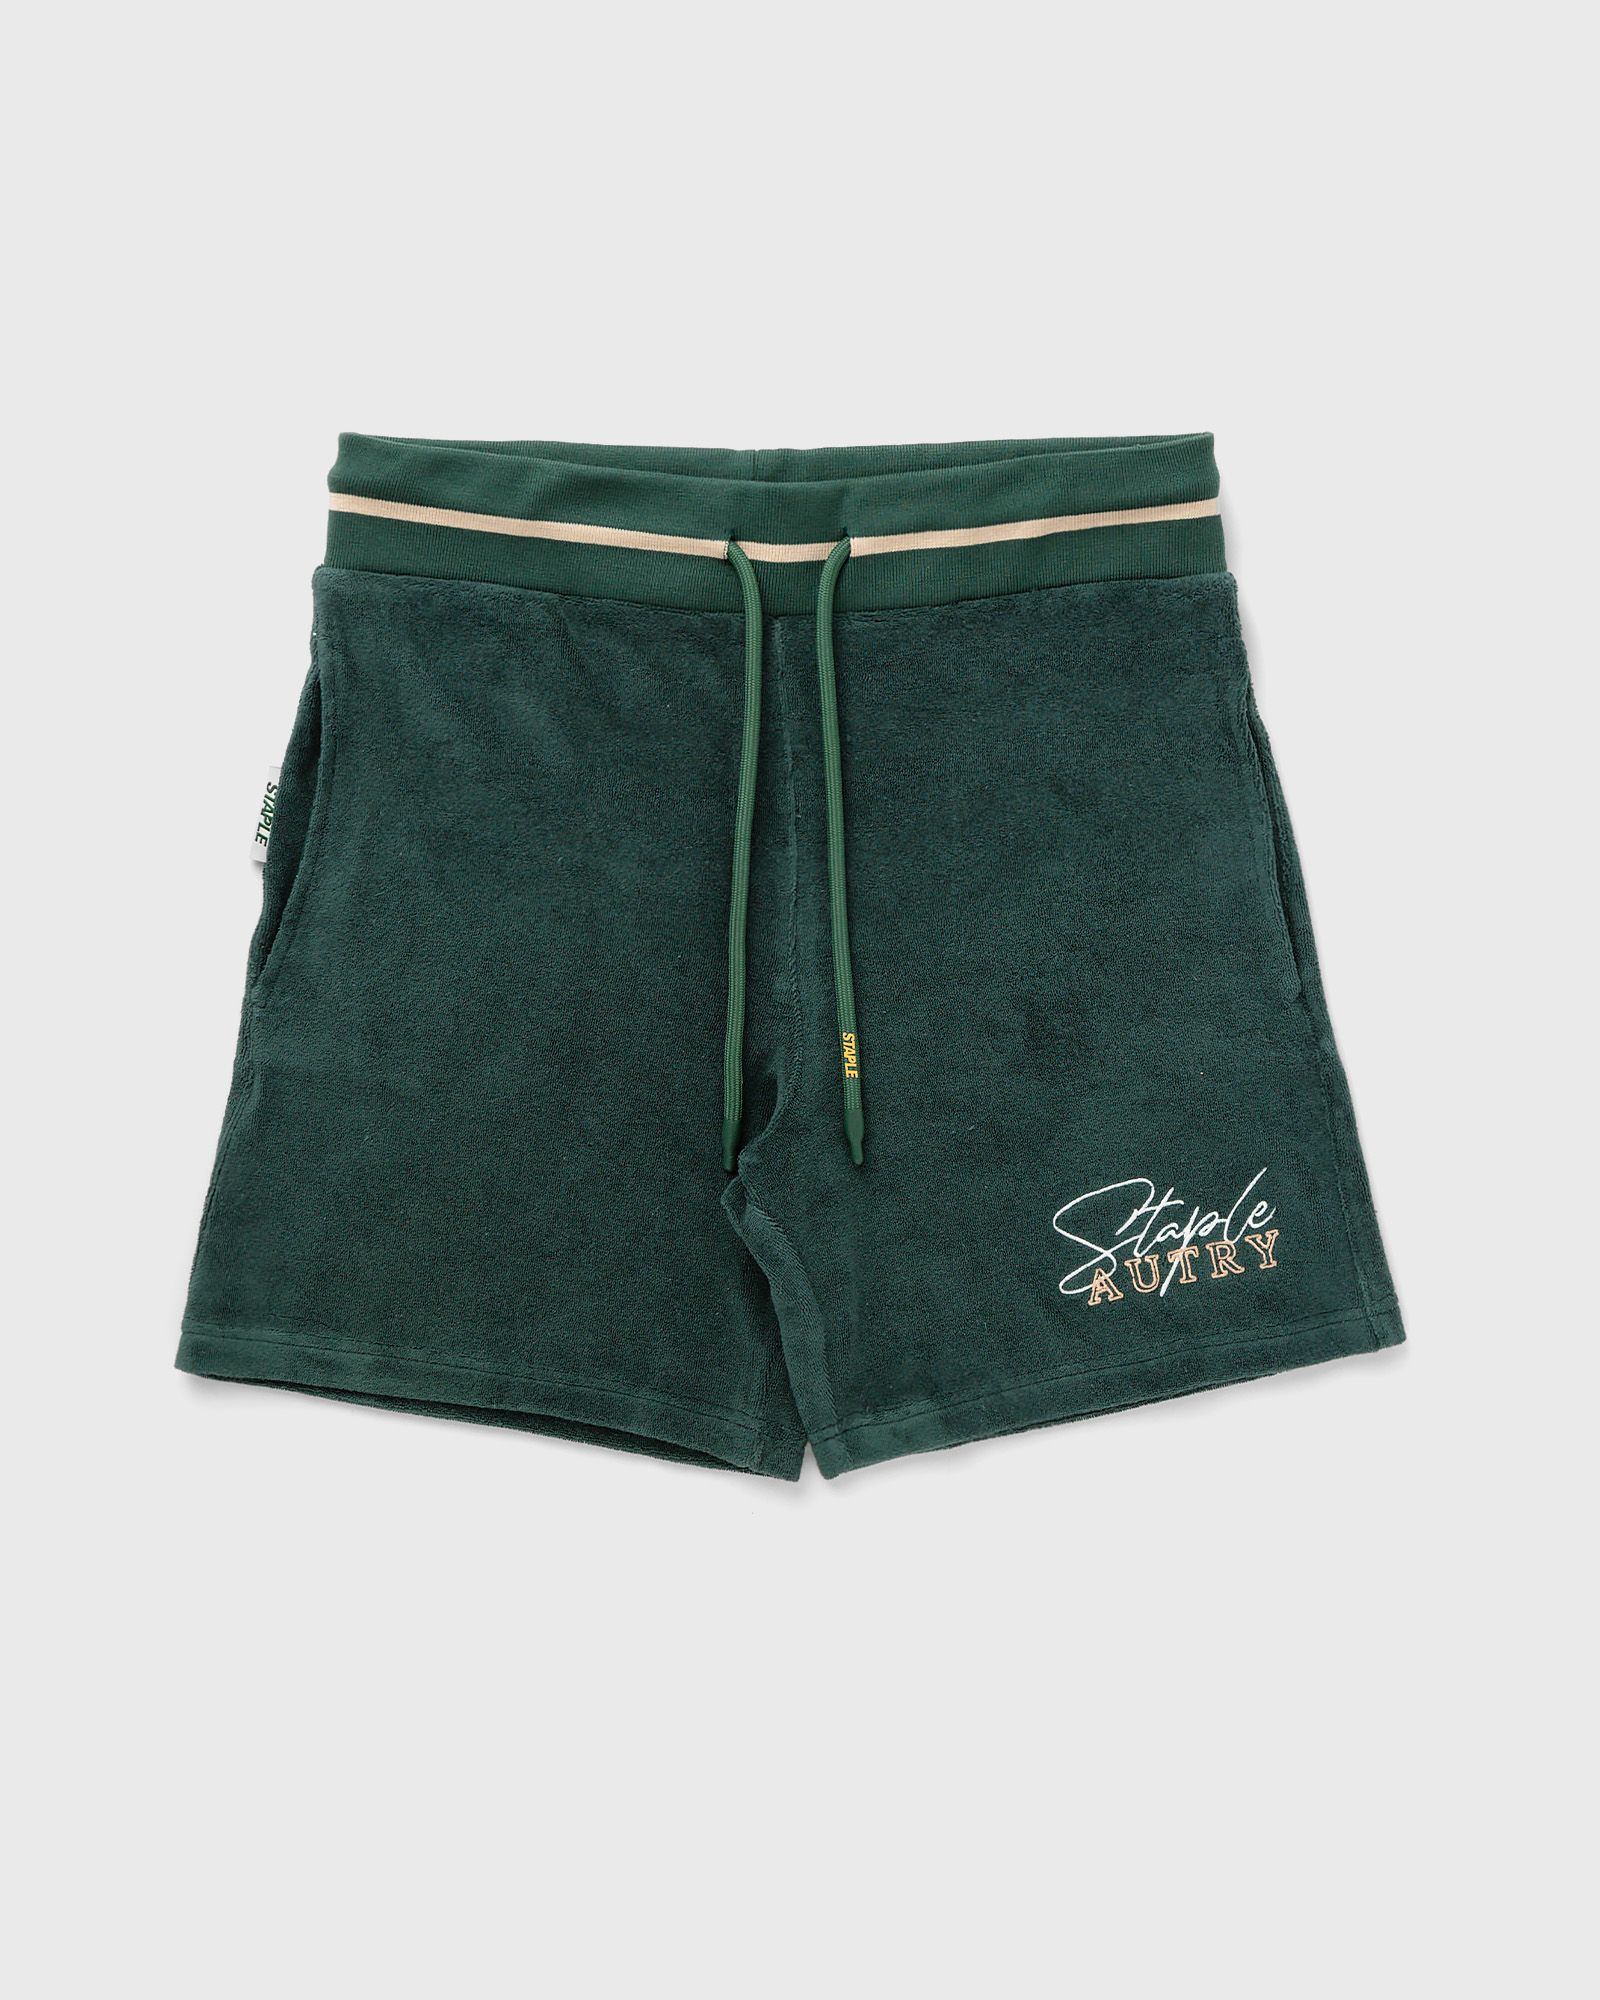 Autry Action Shoes - autry x staple shorts men sport & team shorts green in größe:xl